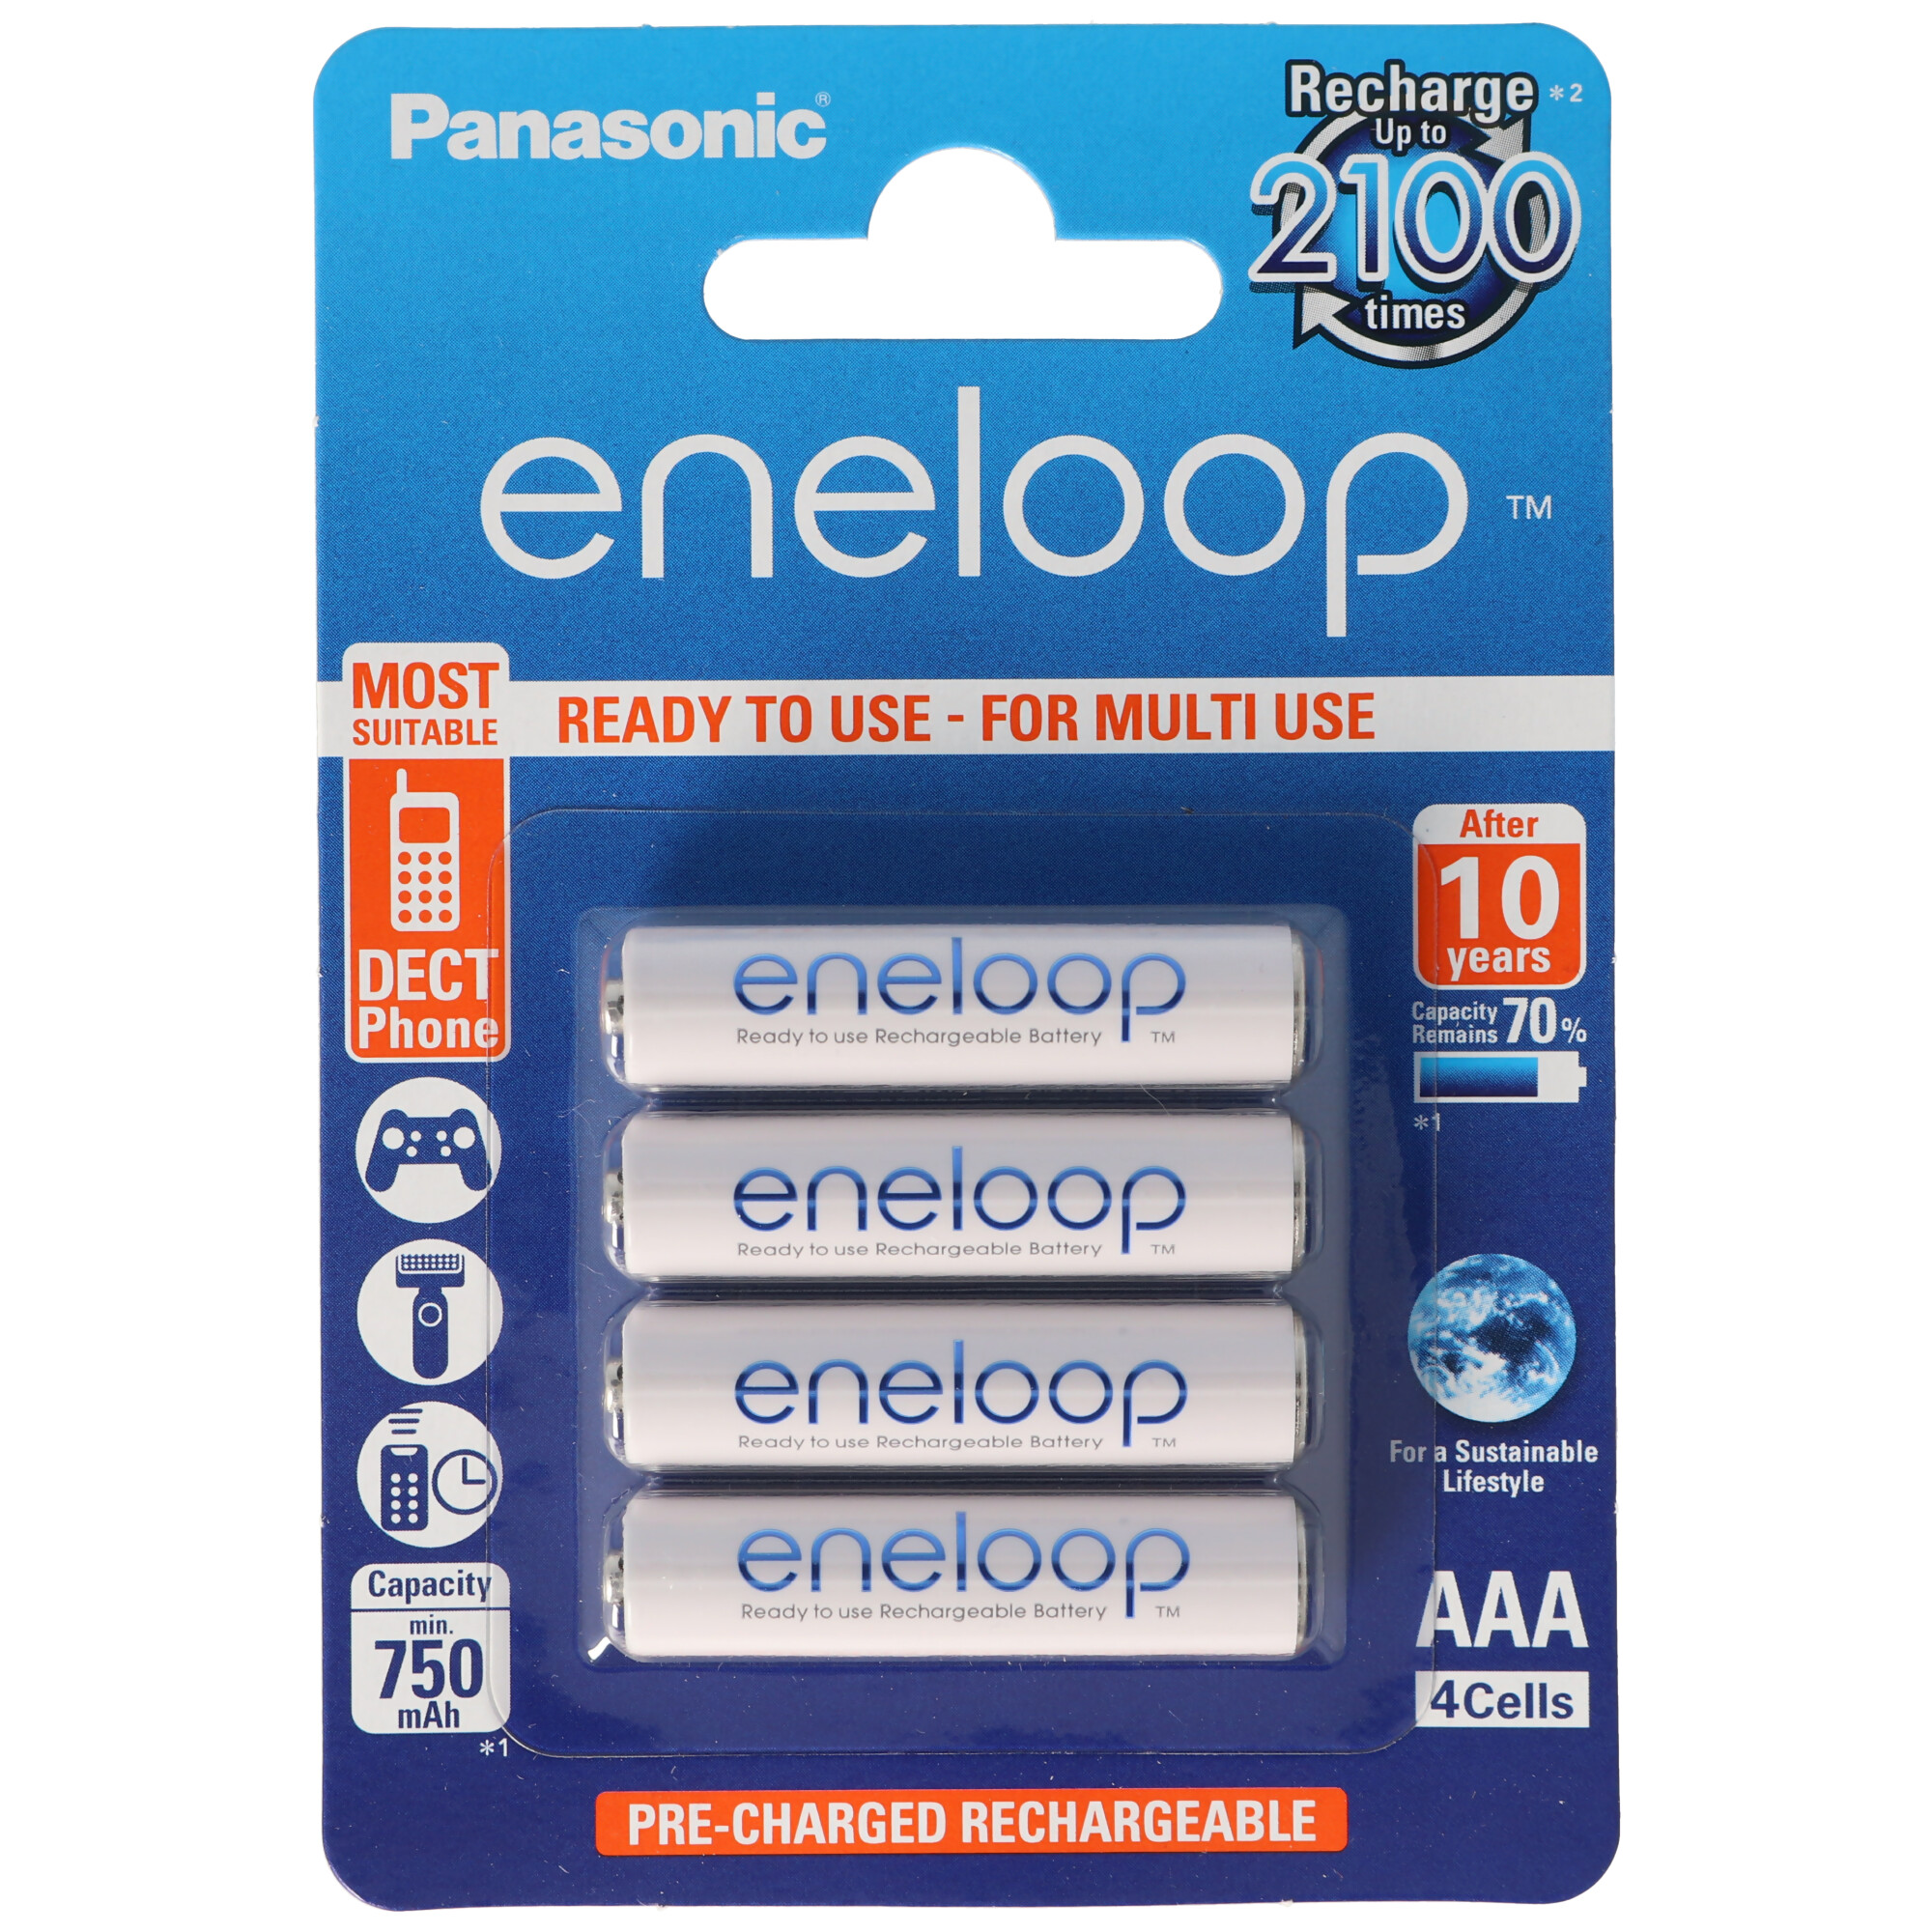 12er Panasonic eneloop Standard AAA, Micro Akkus, neueste Generation, max. 800mAh, 2100 Ladezyklen mit AccuCell BOX10 AKTION 10+2 !